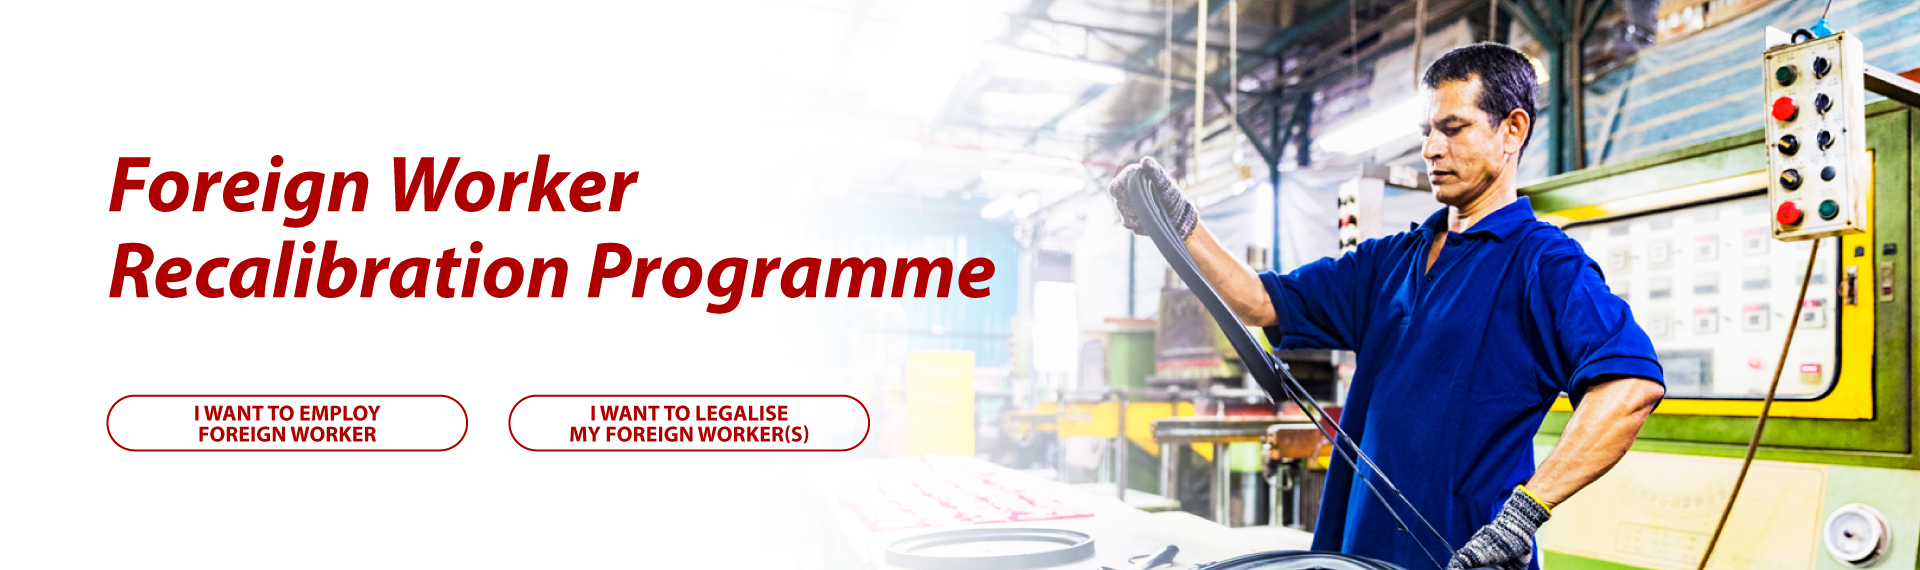 Foreign Worker Re-employment Programme